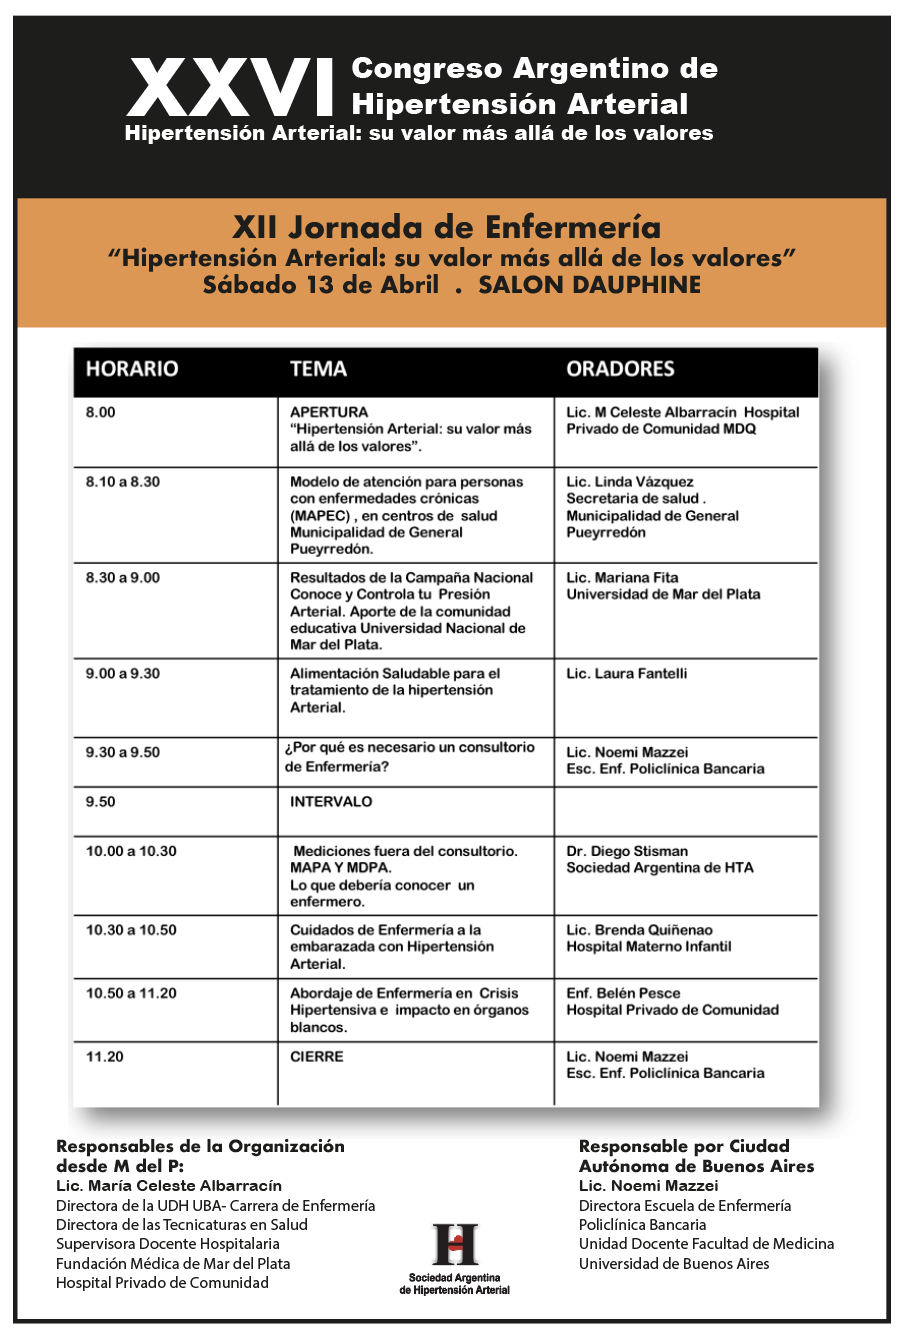 XXVI Congreso, Mar del Plata 2019, Jornada de Enfermeria